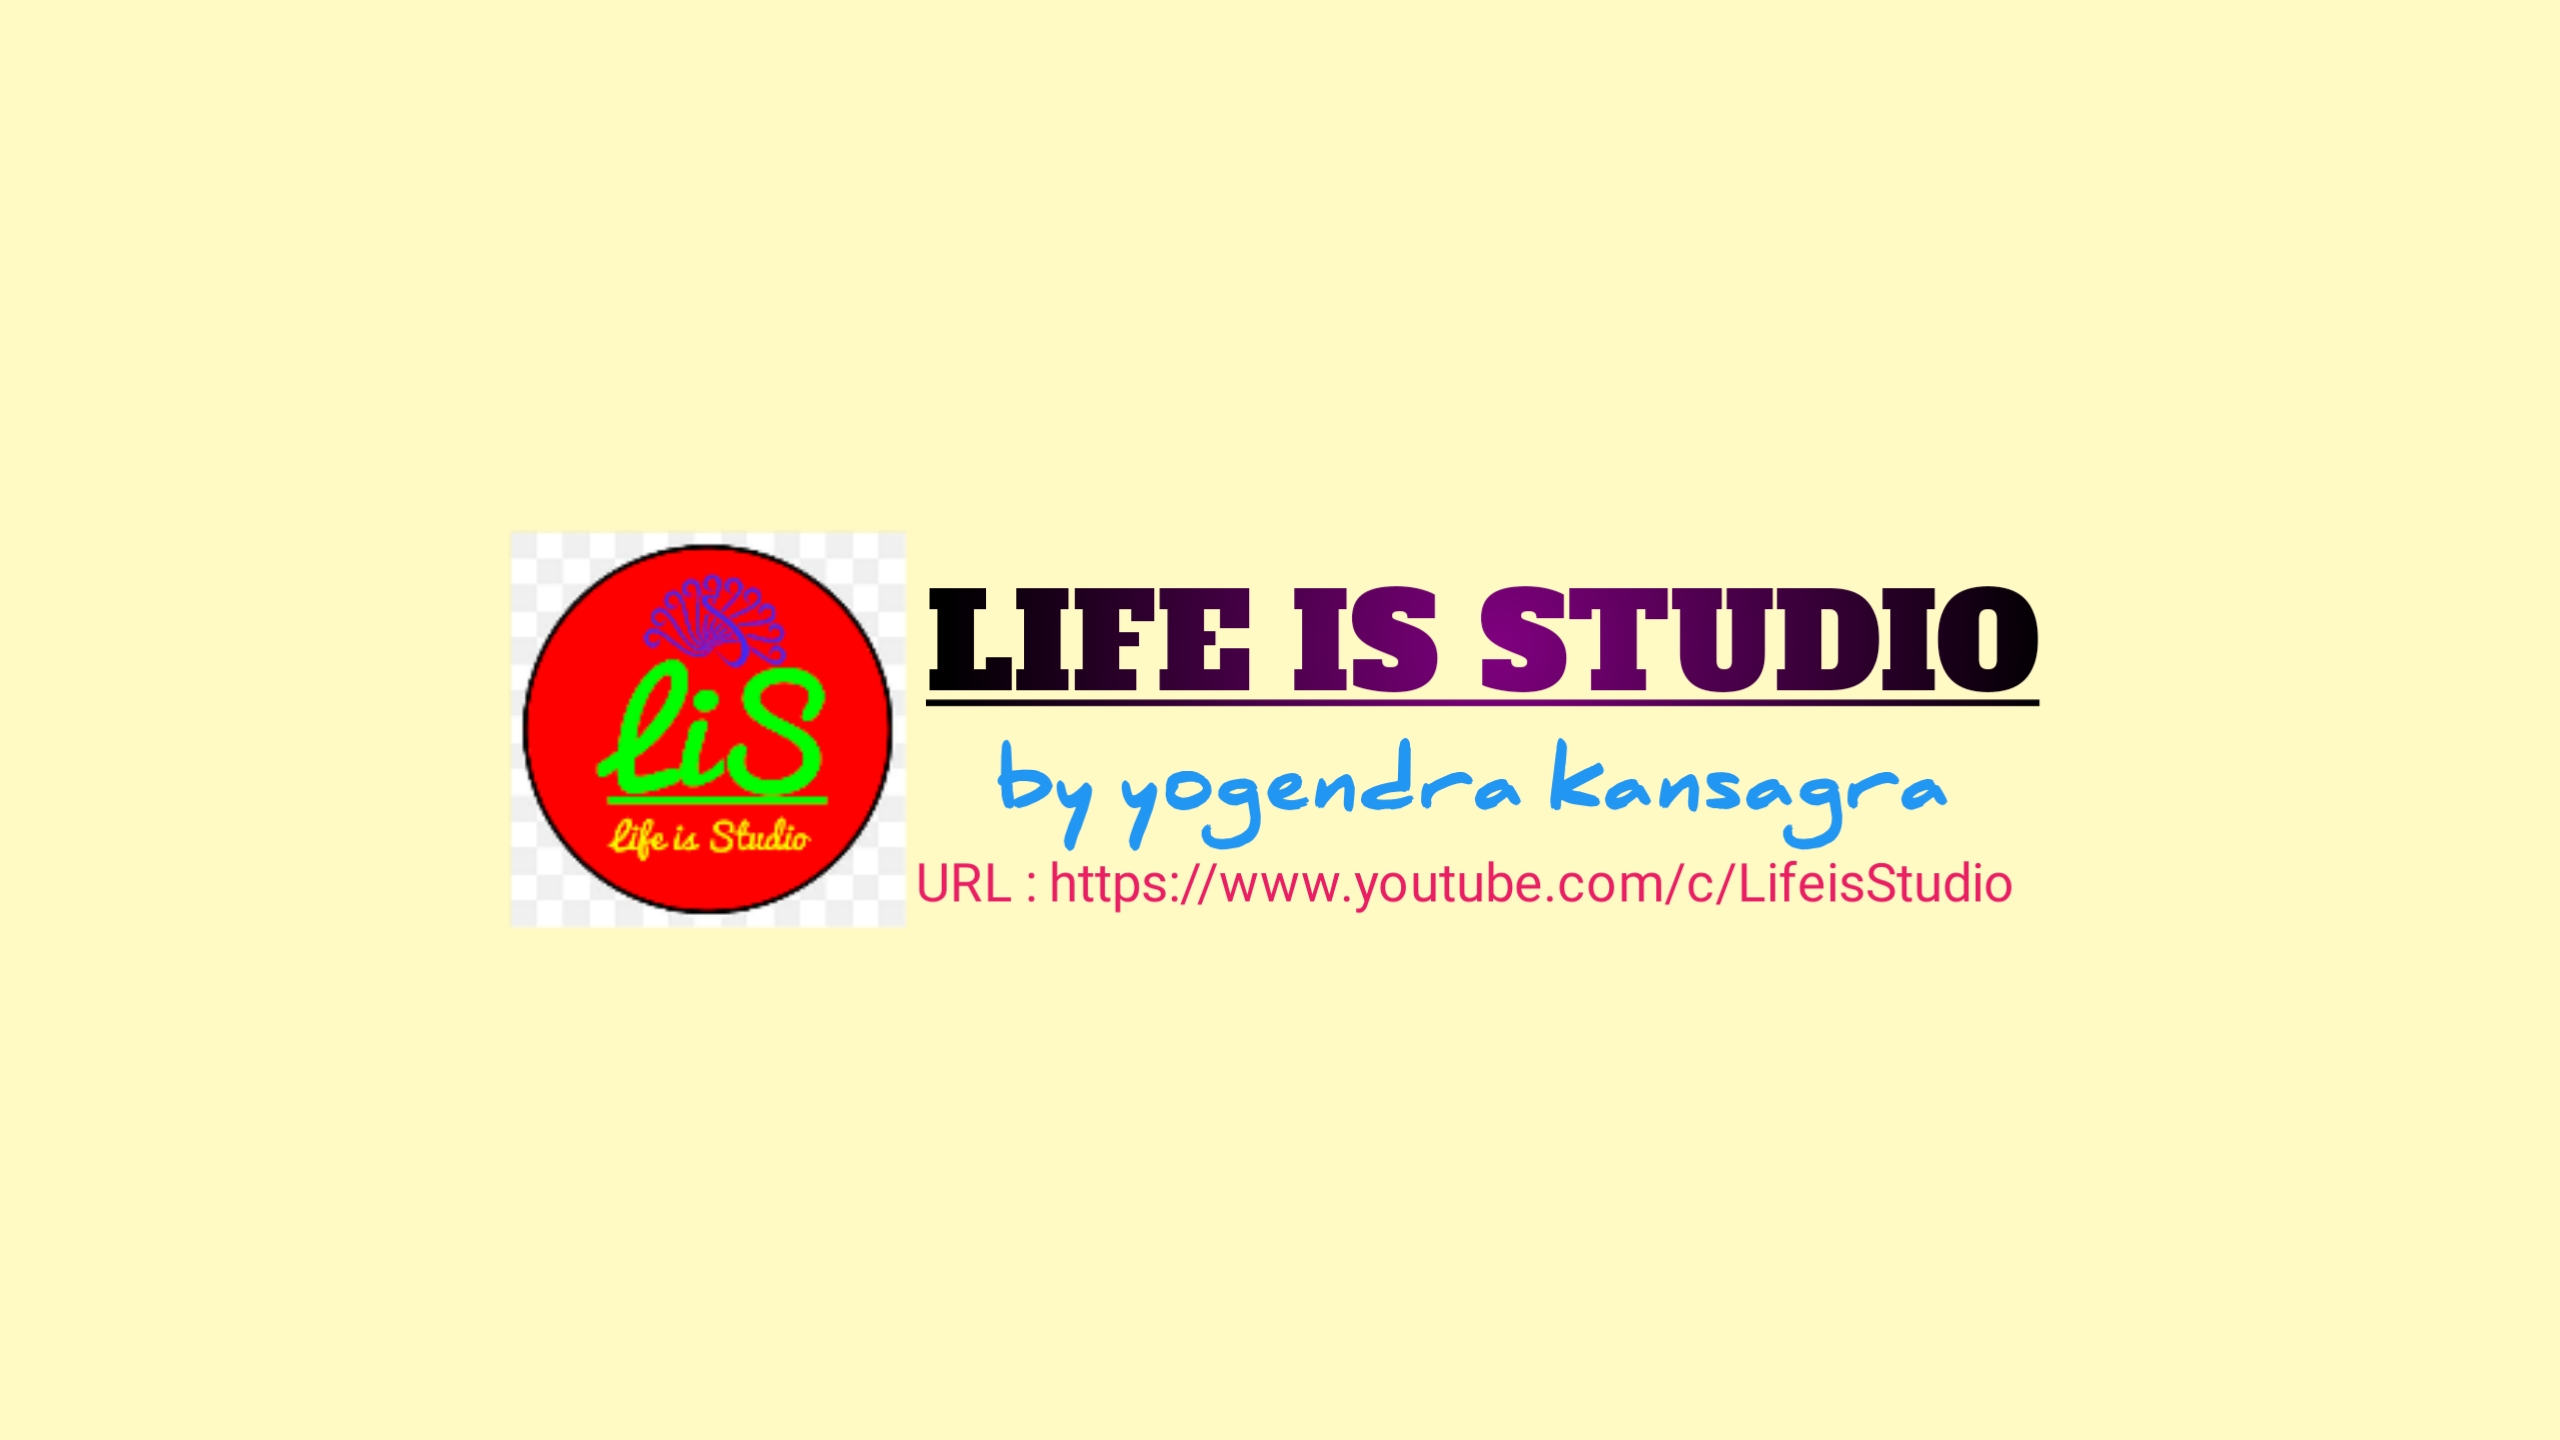 Life is studio